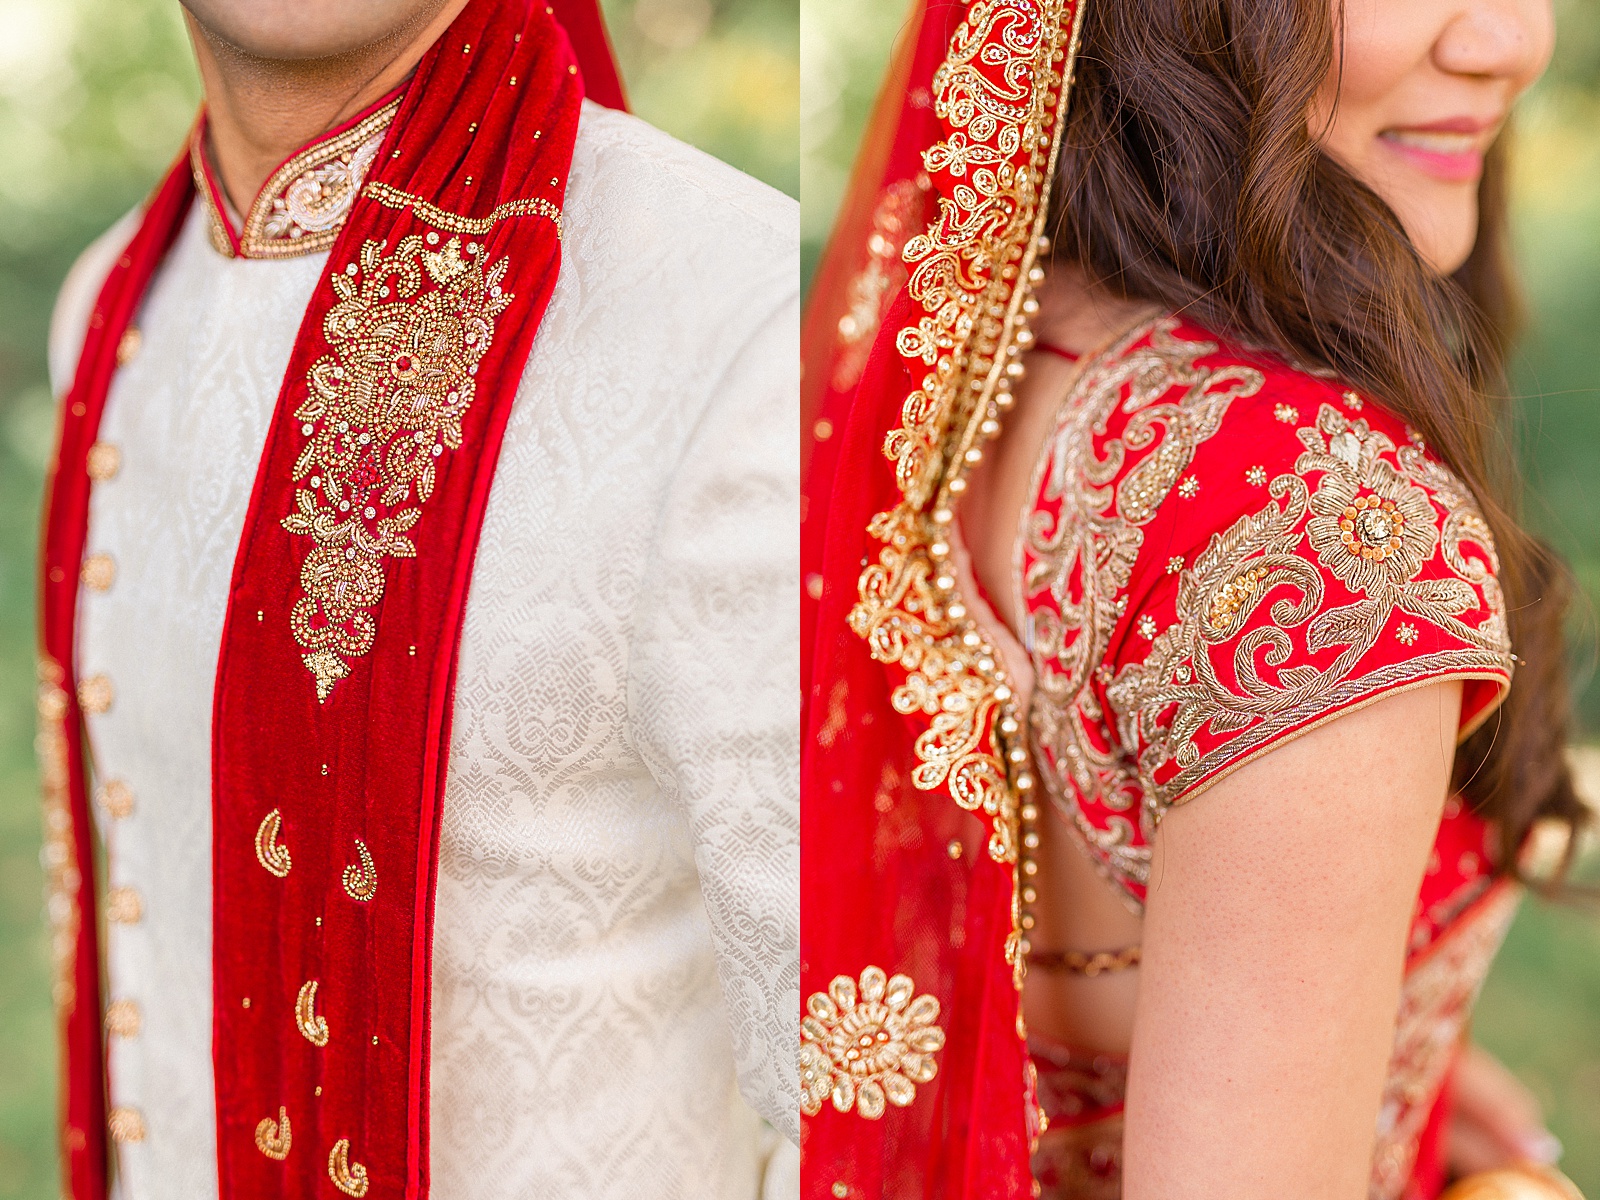 Indian Wedding, Bride and Groom details